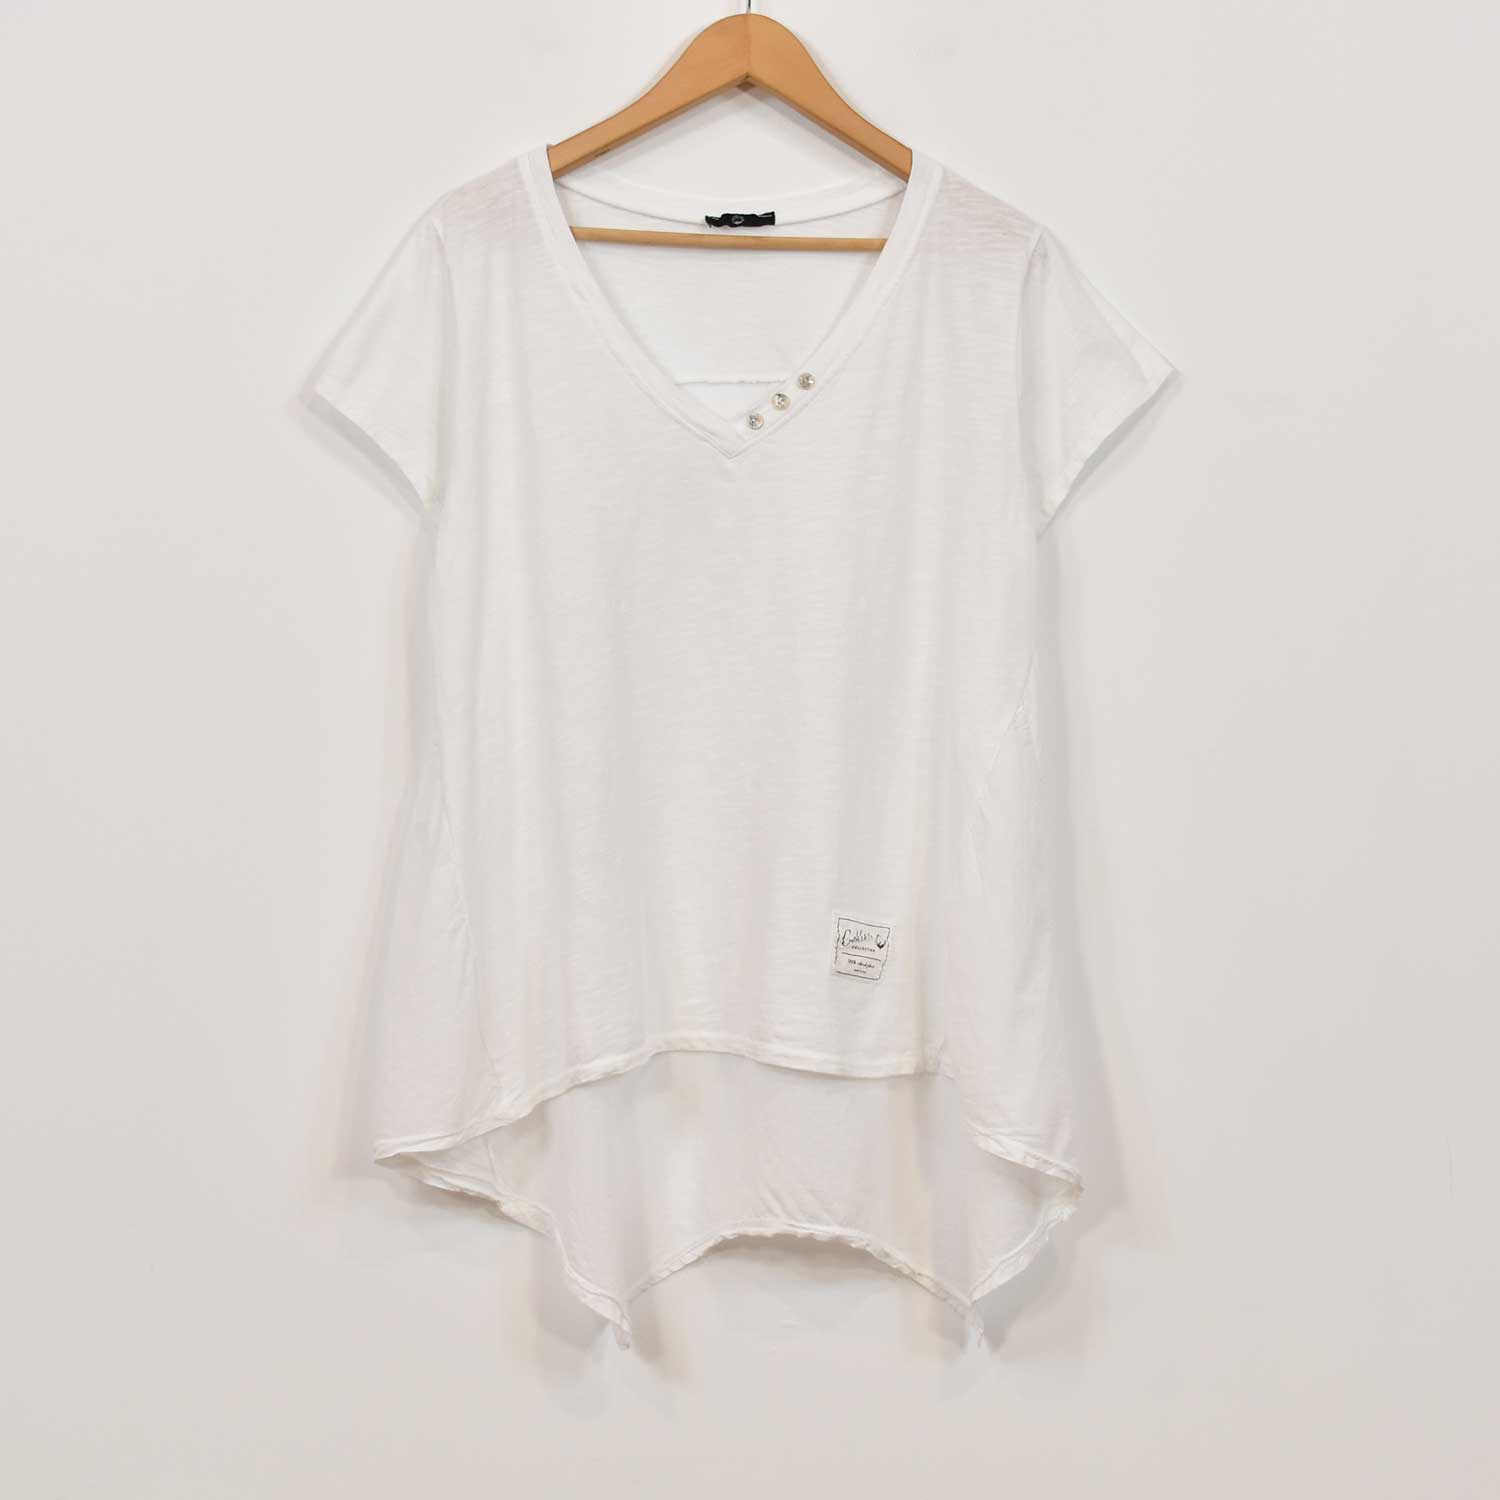 White peaks t-shirt